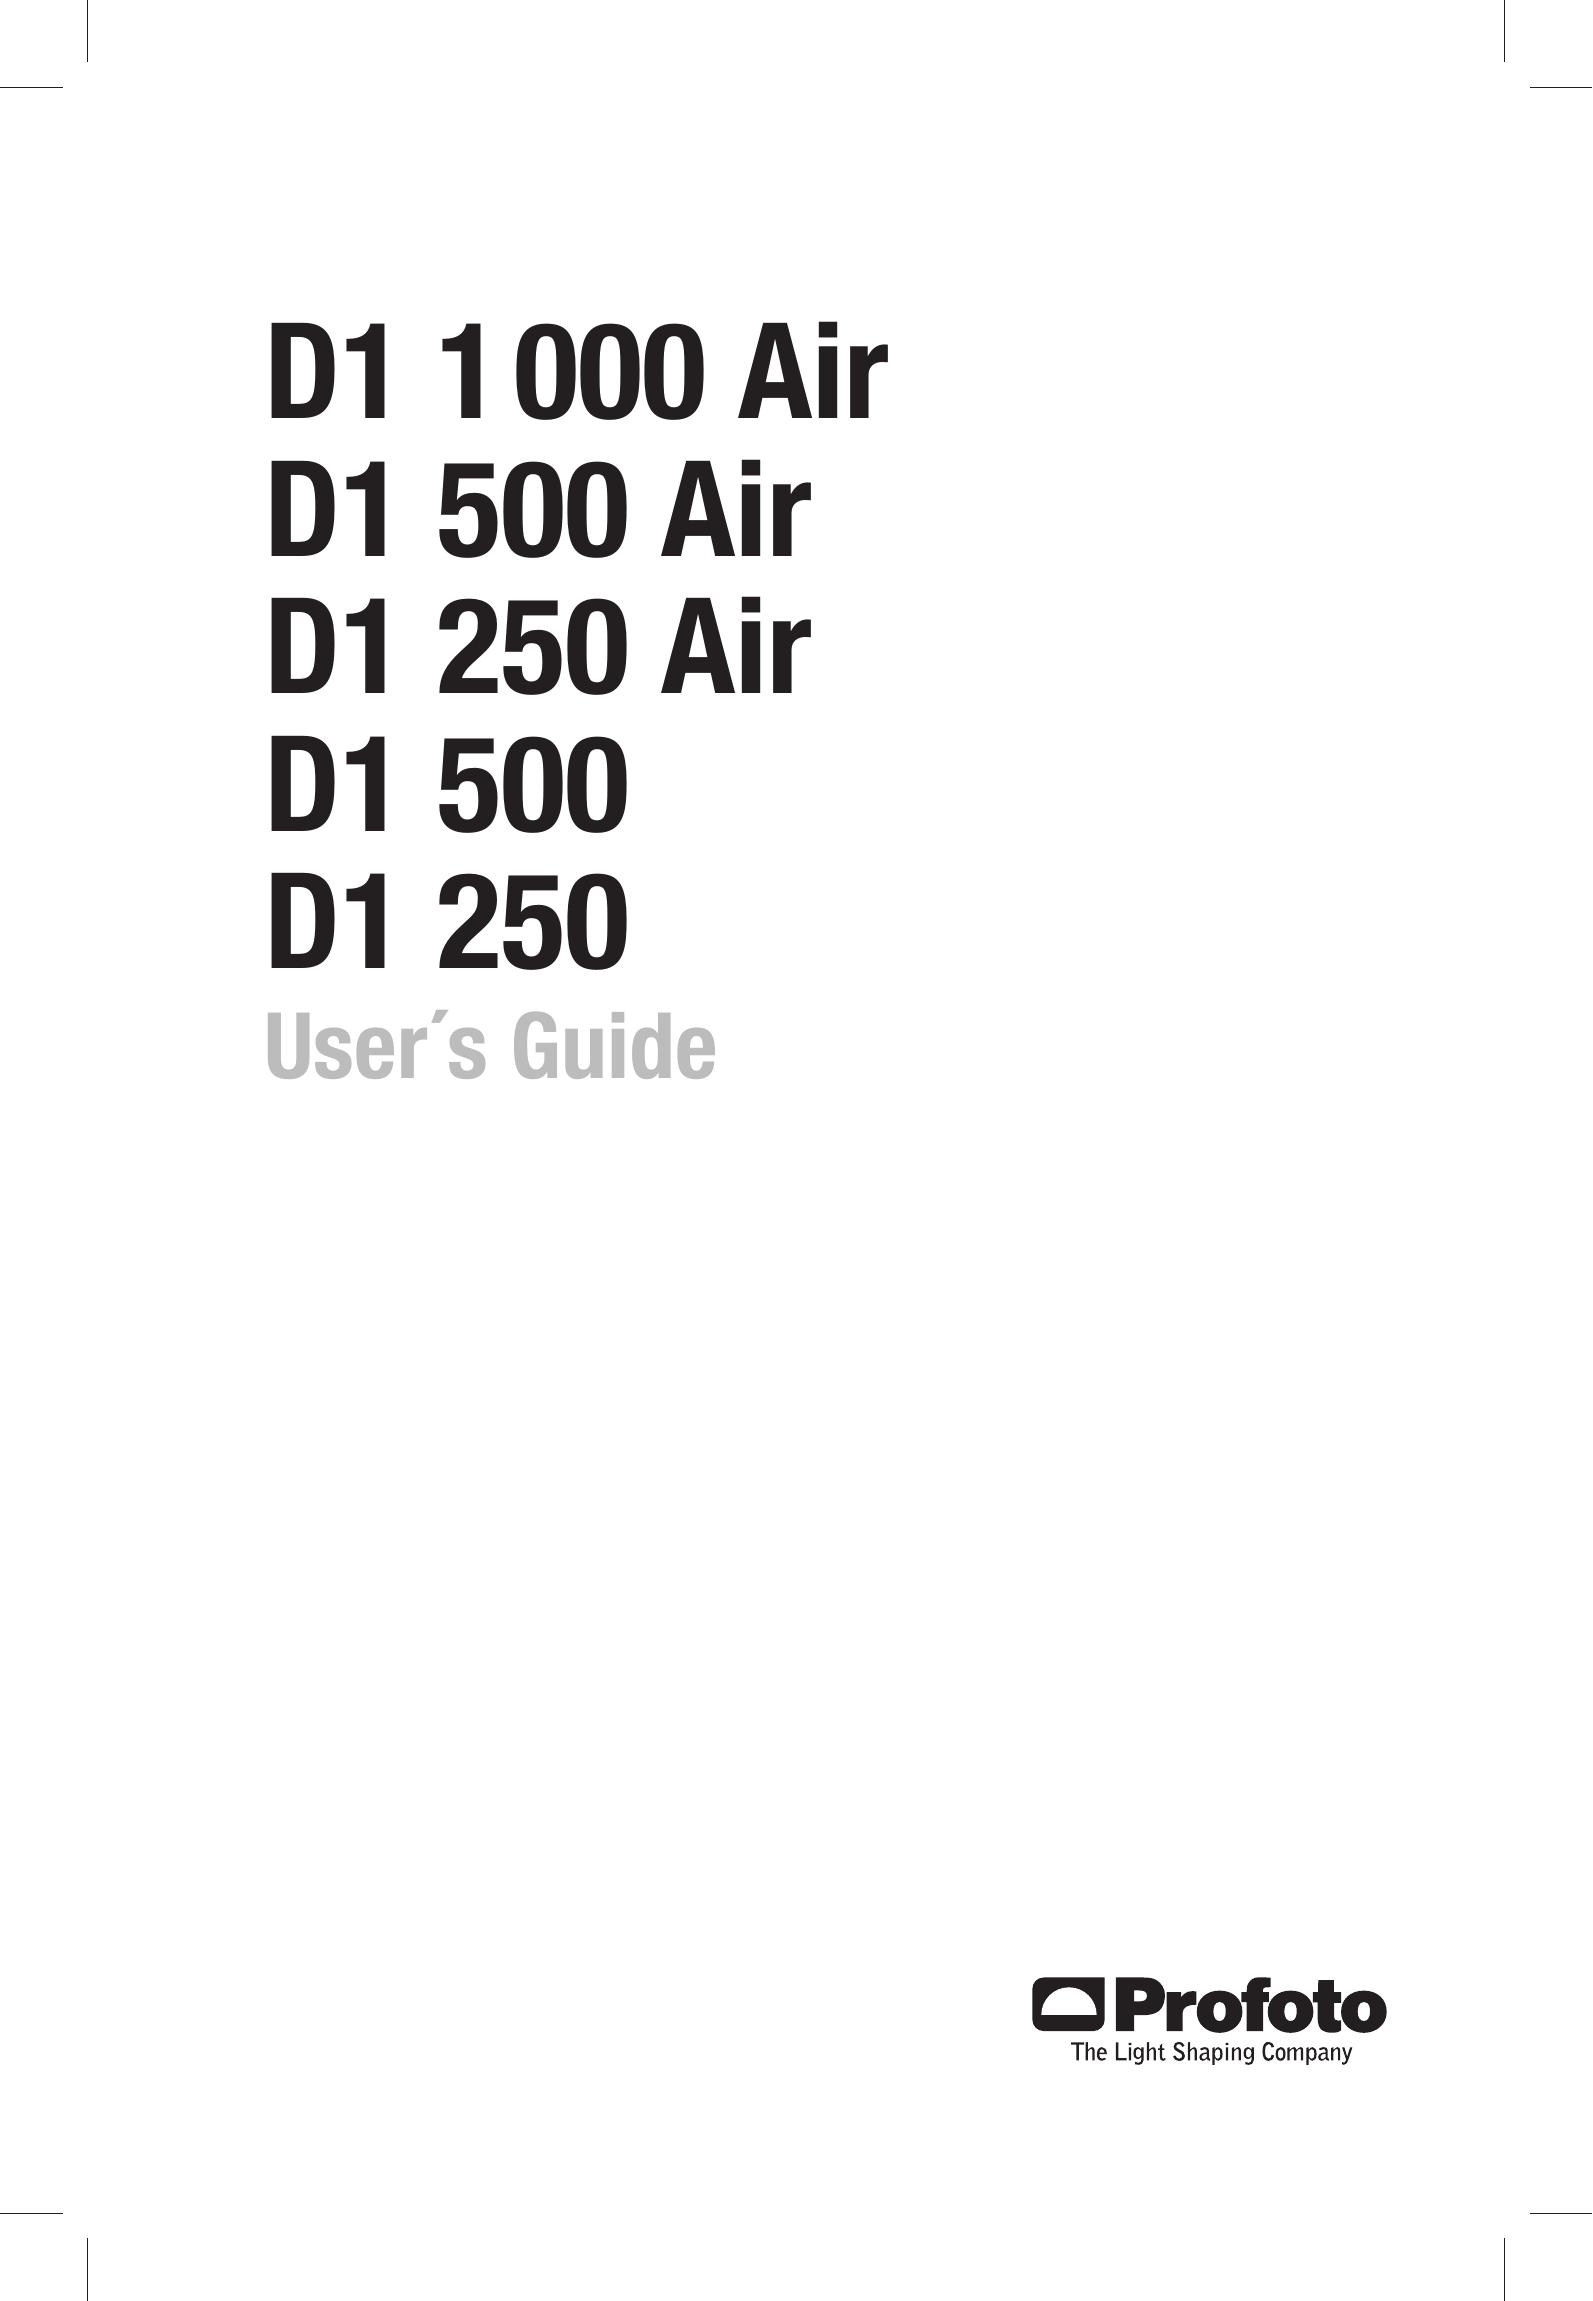 Profoto D1 250 Air Digital Camera User Manual